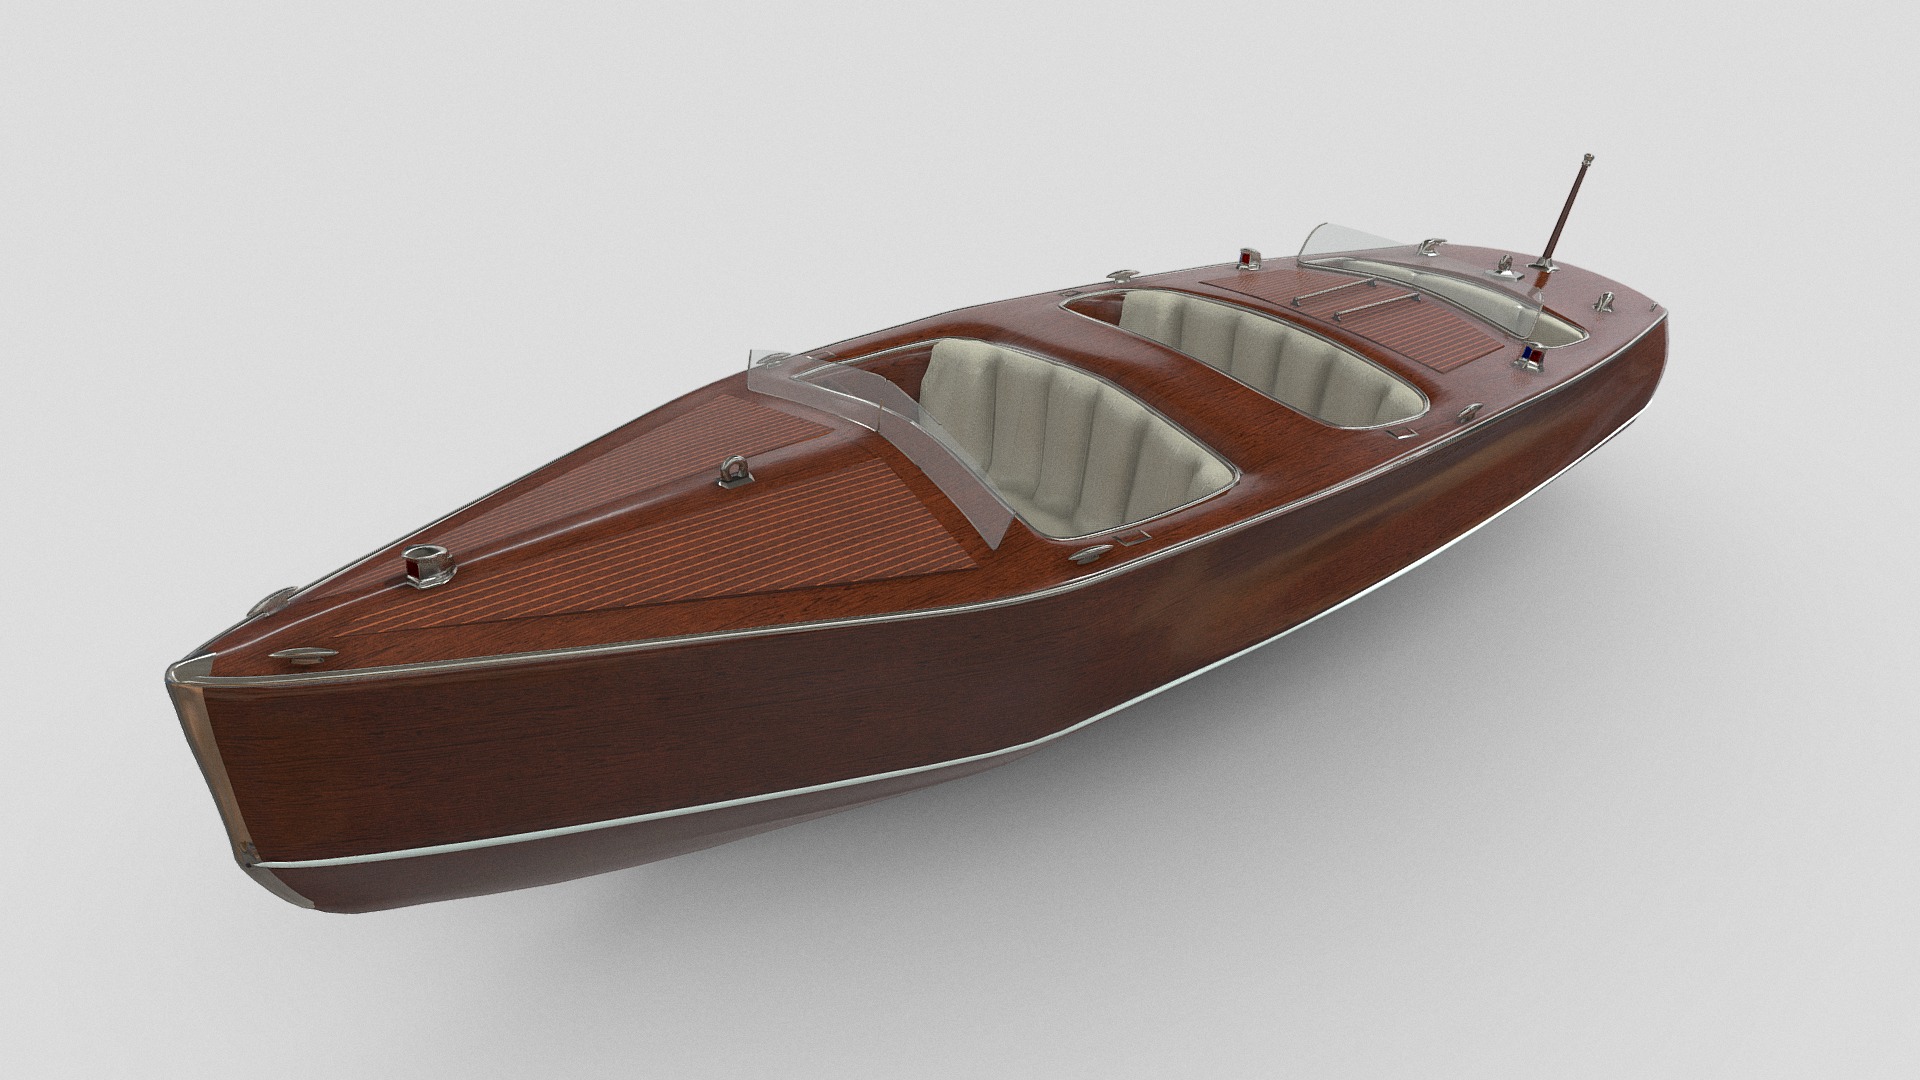 3D model Retro Wood Boat – Chriscraft – Hangerboat - This is a 3D model of the Retro Wood Boat - Chriscraft - Hangerboat. The 3D model is about a brown leather shoe.